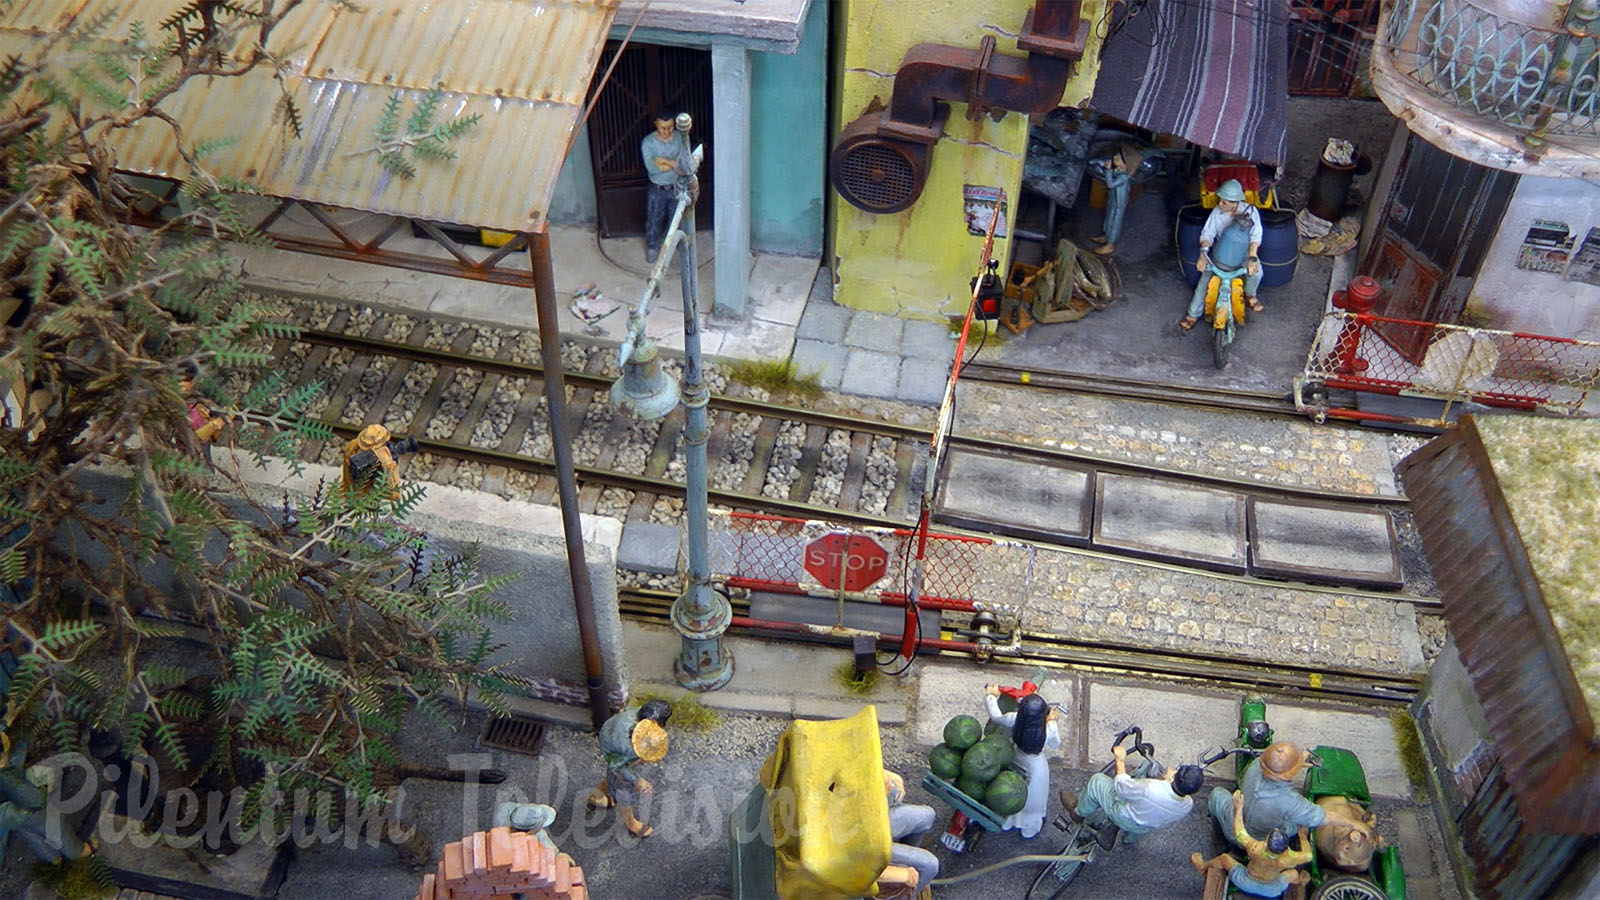 Model Railway Diorama of Maeklong Train Market - Model Railroading and Scratch Building at its Best - On30 Layouts